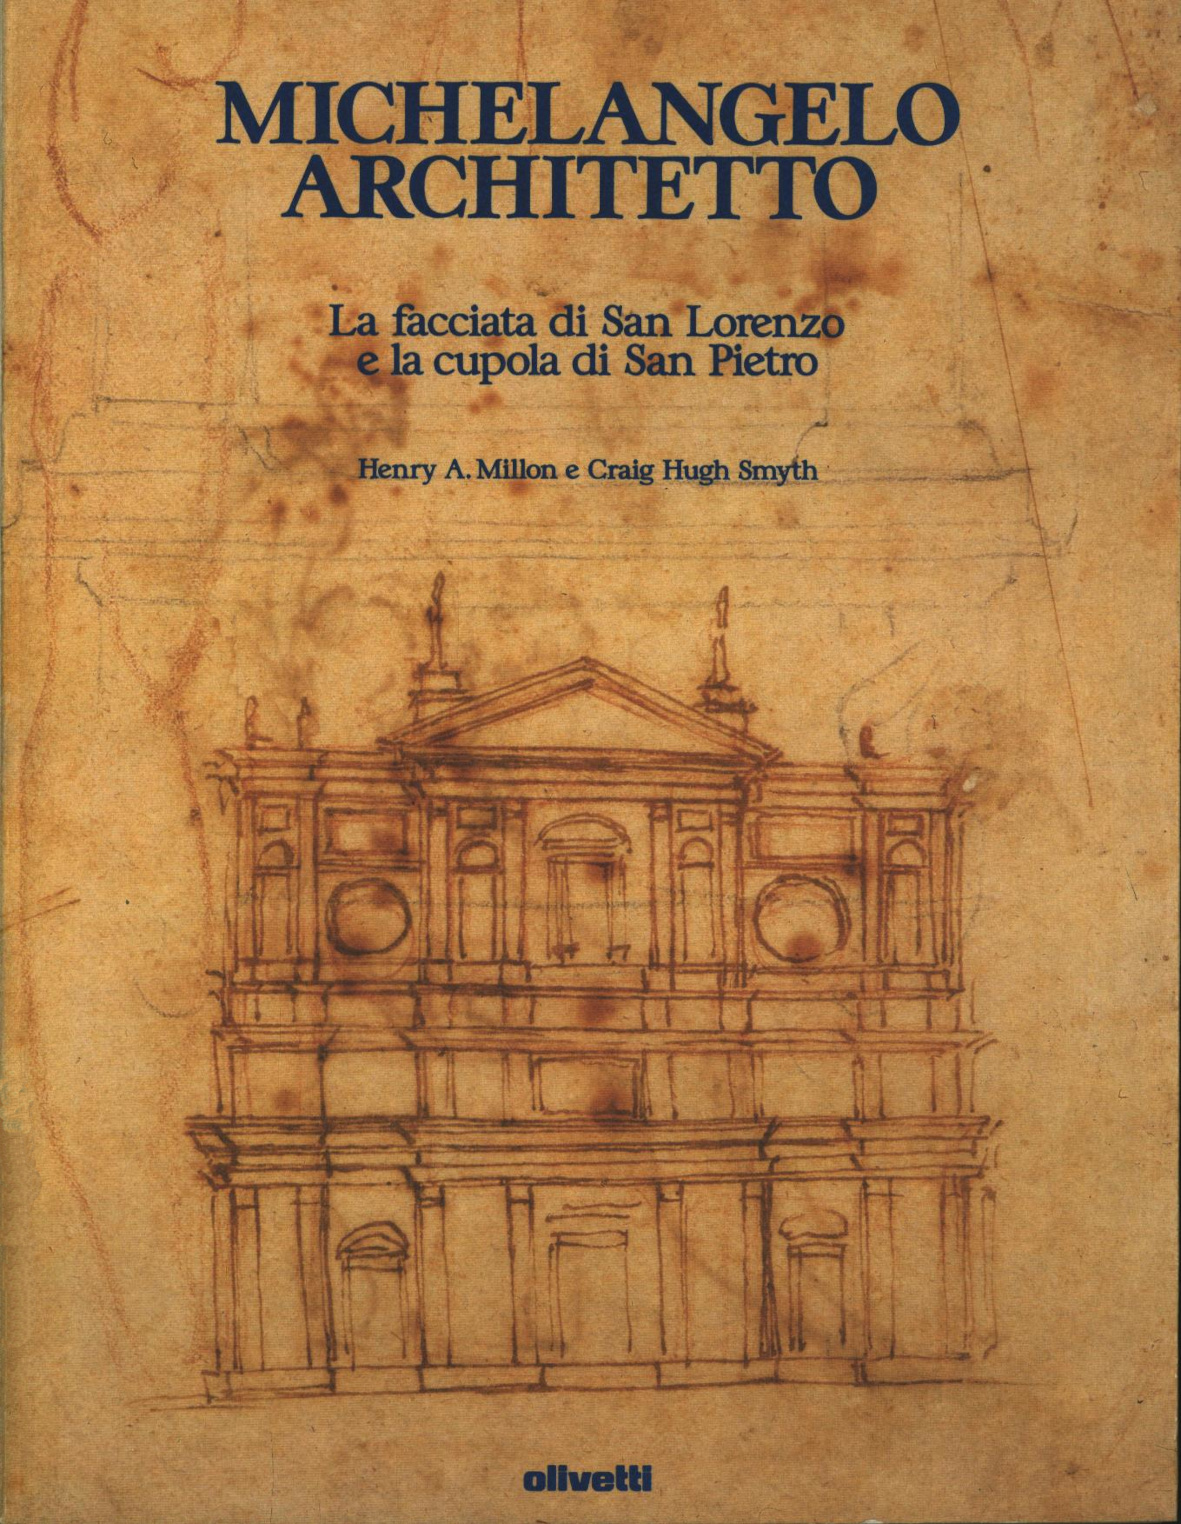 Michelangelo Architetto (‘Michelangelo the Architect’)